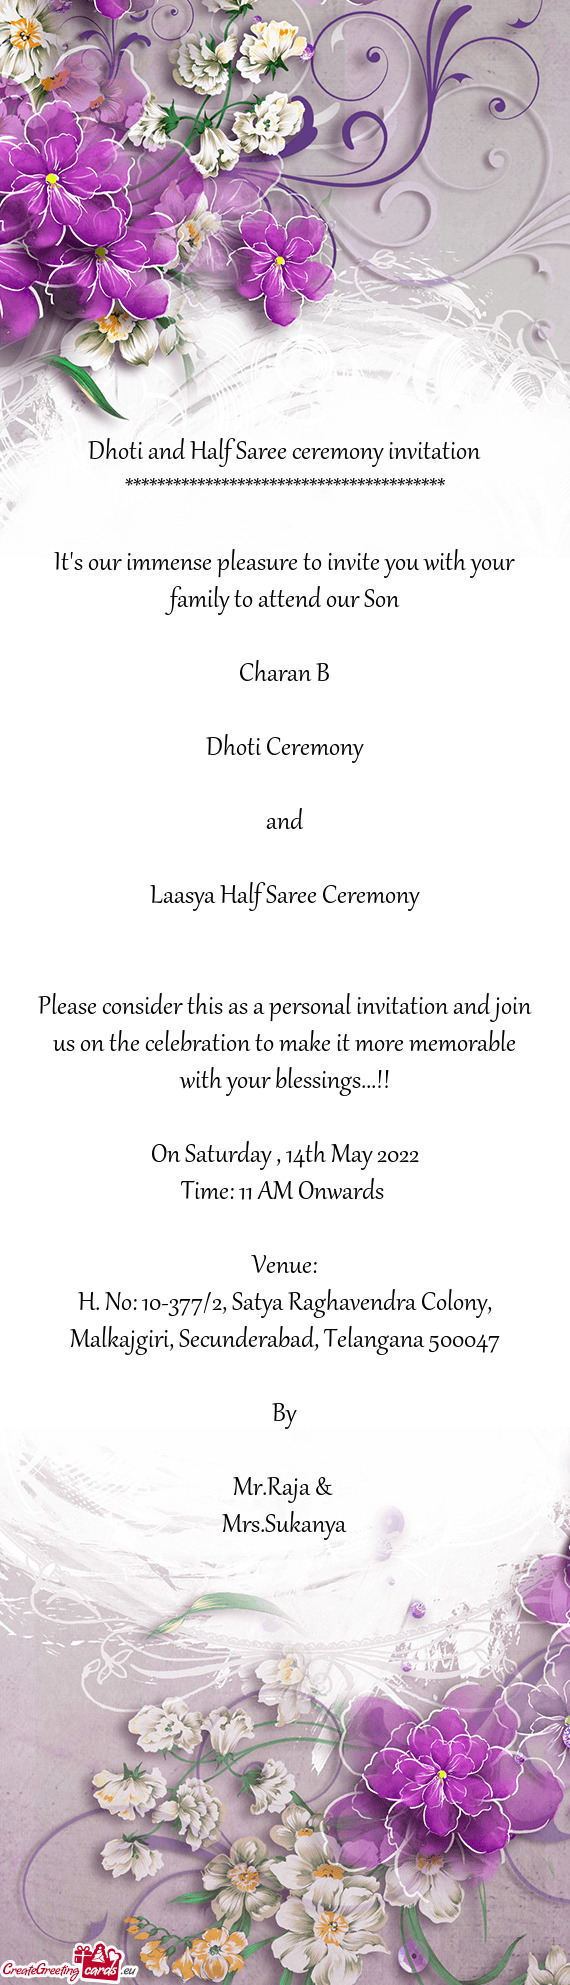 Laasya Half Saree Ceremony